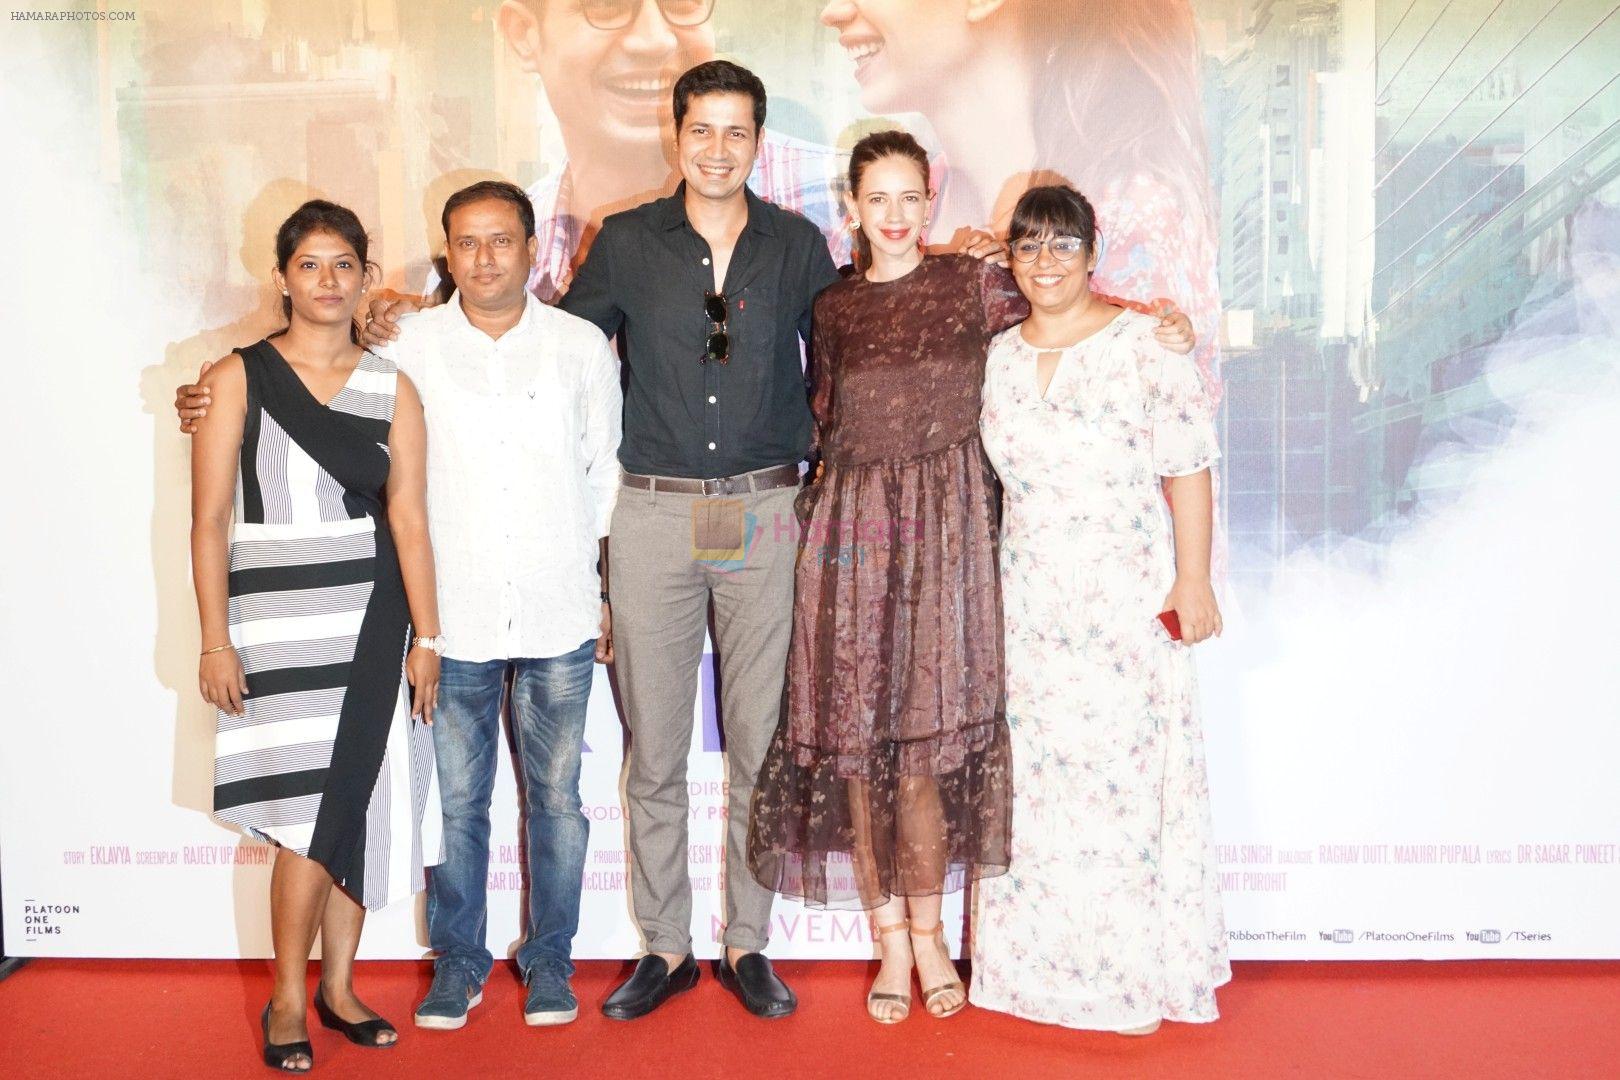 kalki koechlin, sumeet Vyas, Rakhee Sandilya at the trailer Launch Of Film Ribbon on 3rd Oct 2017